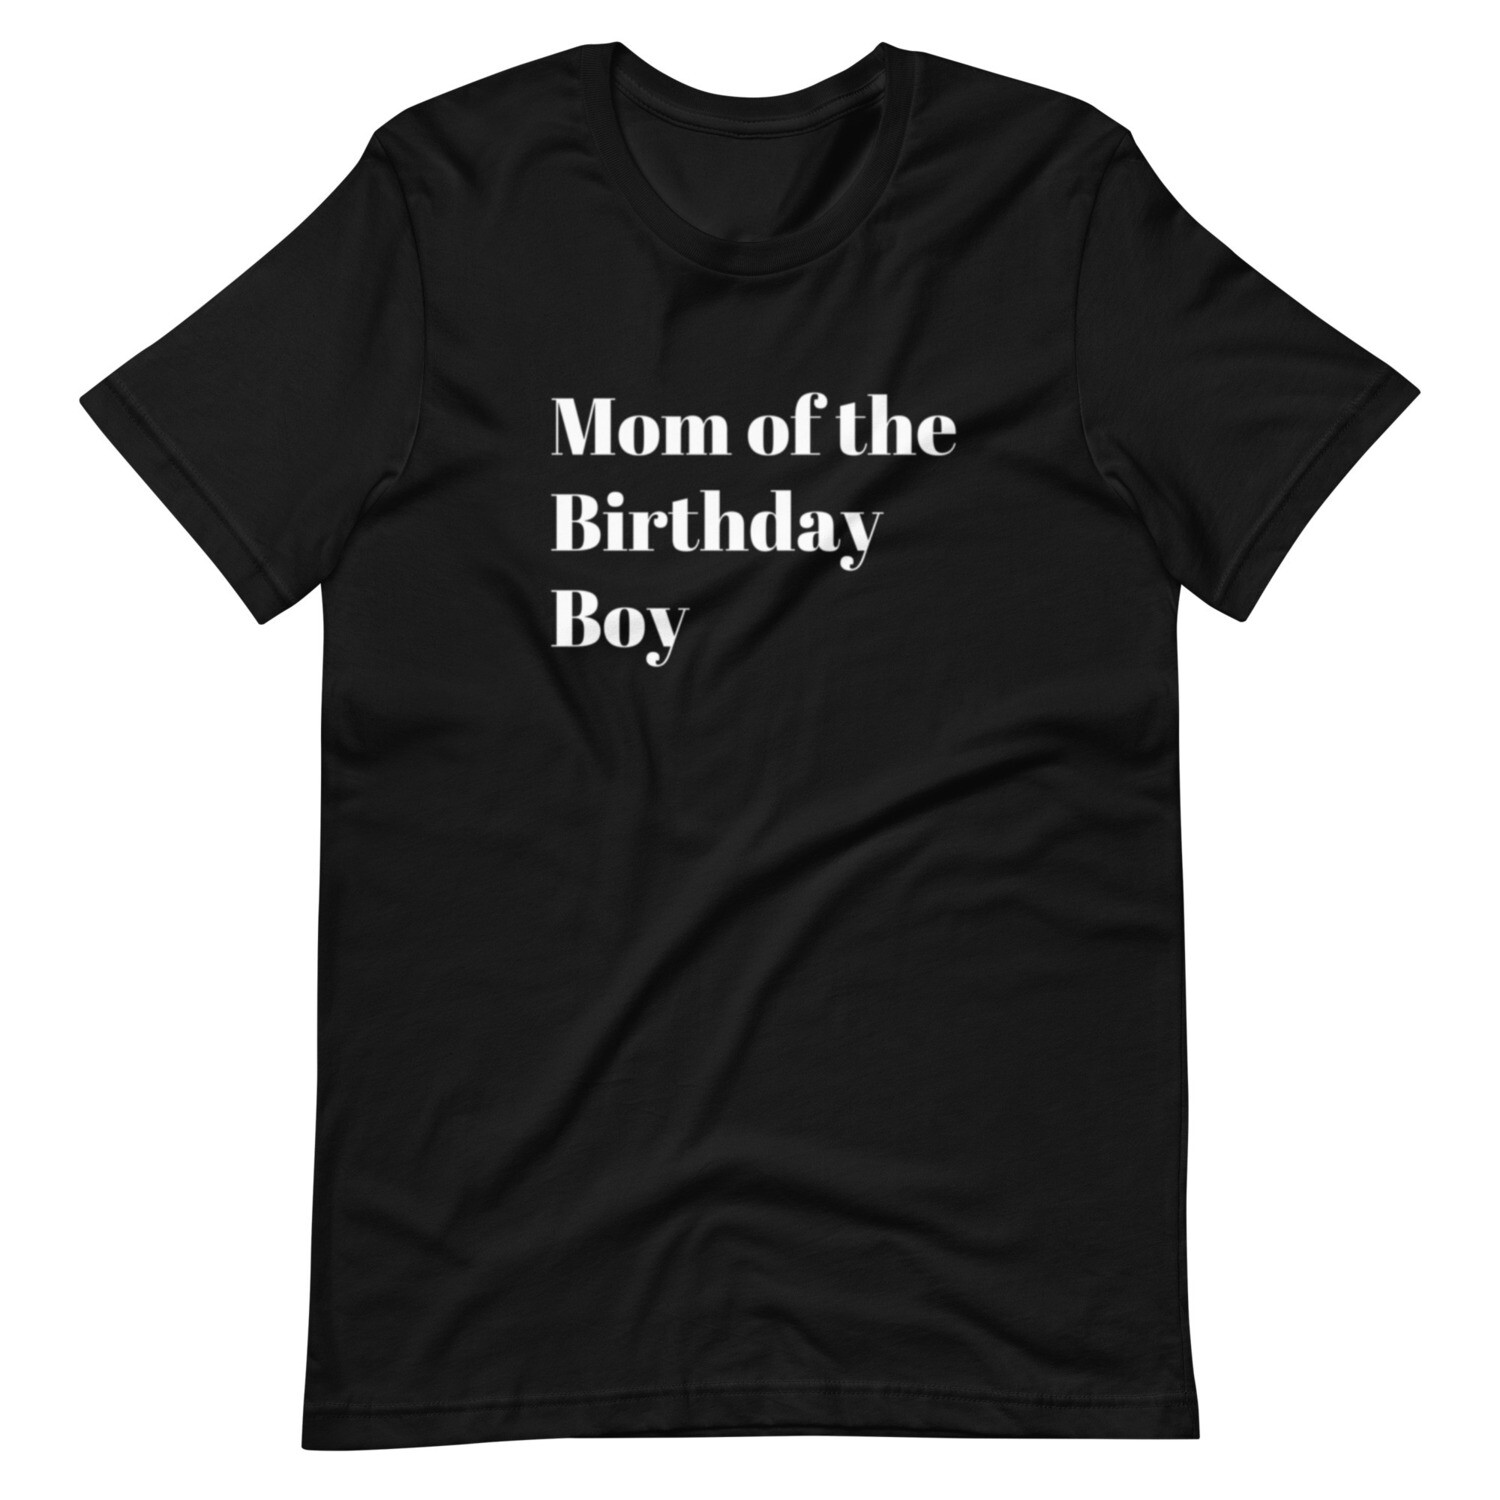 Mom of the Birthday Boy